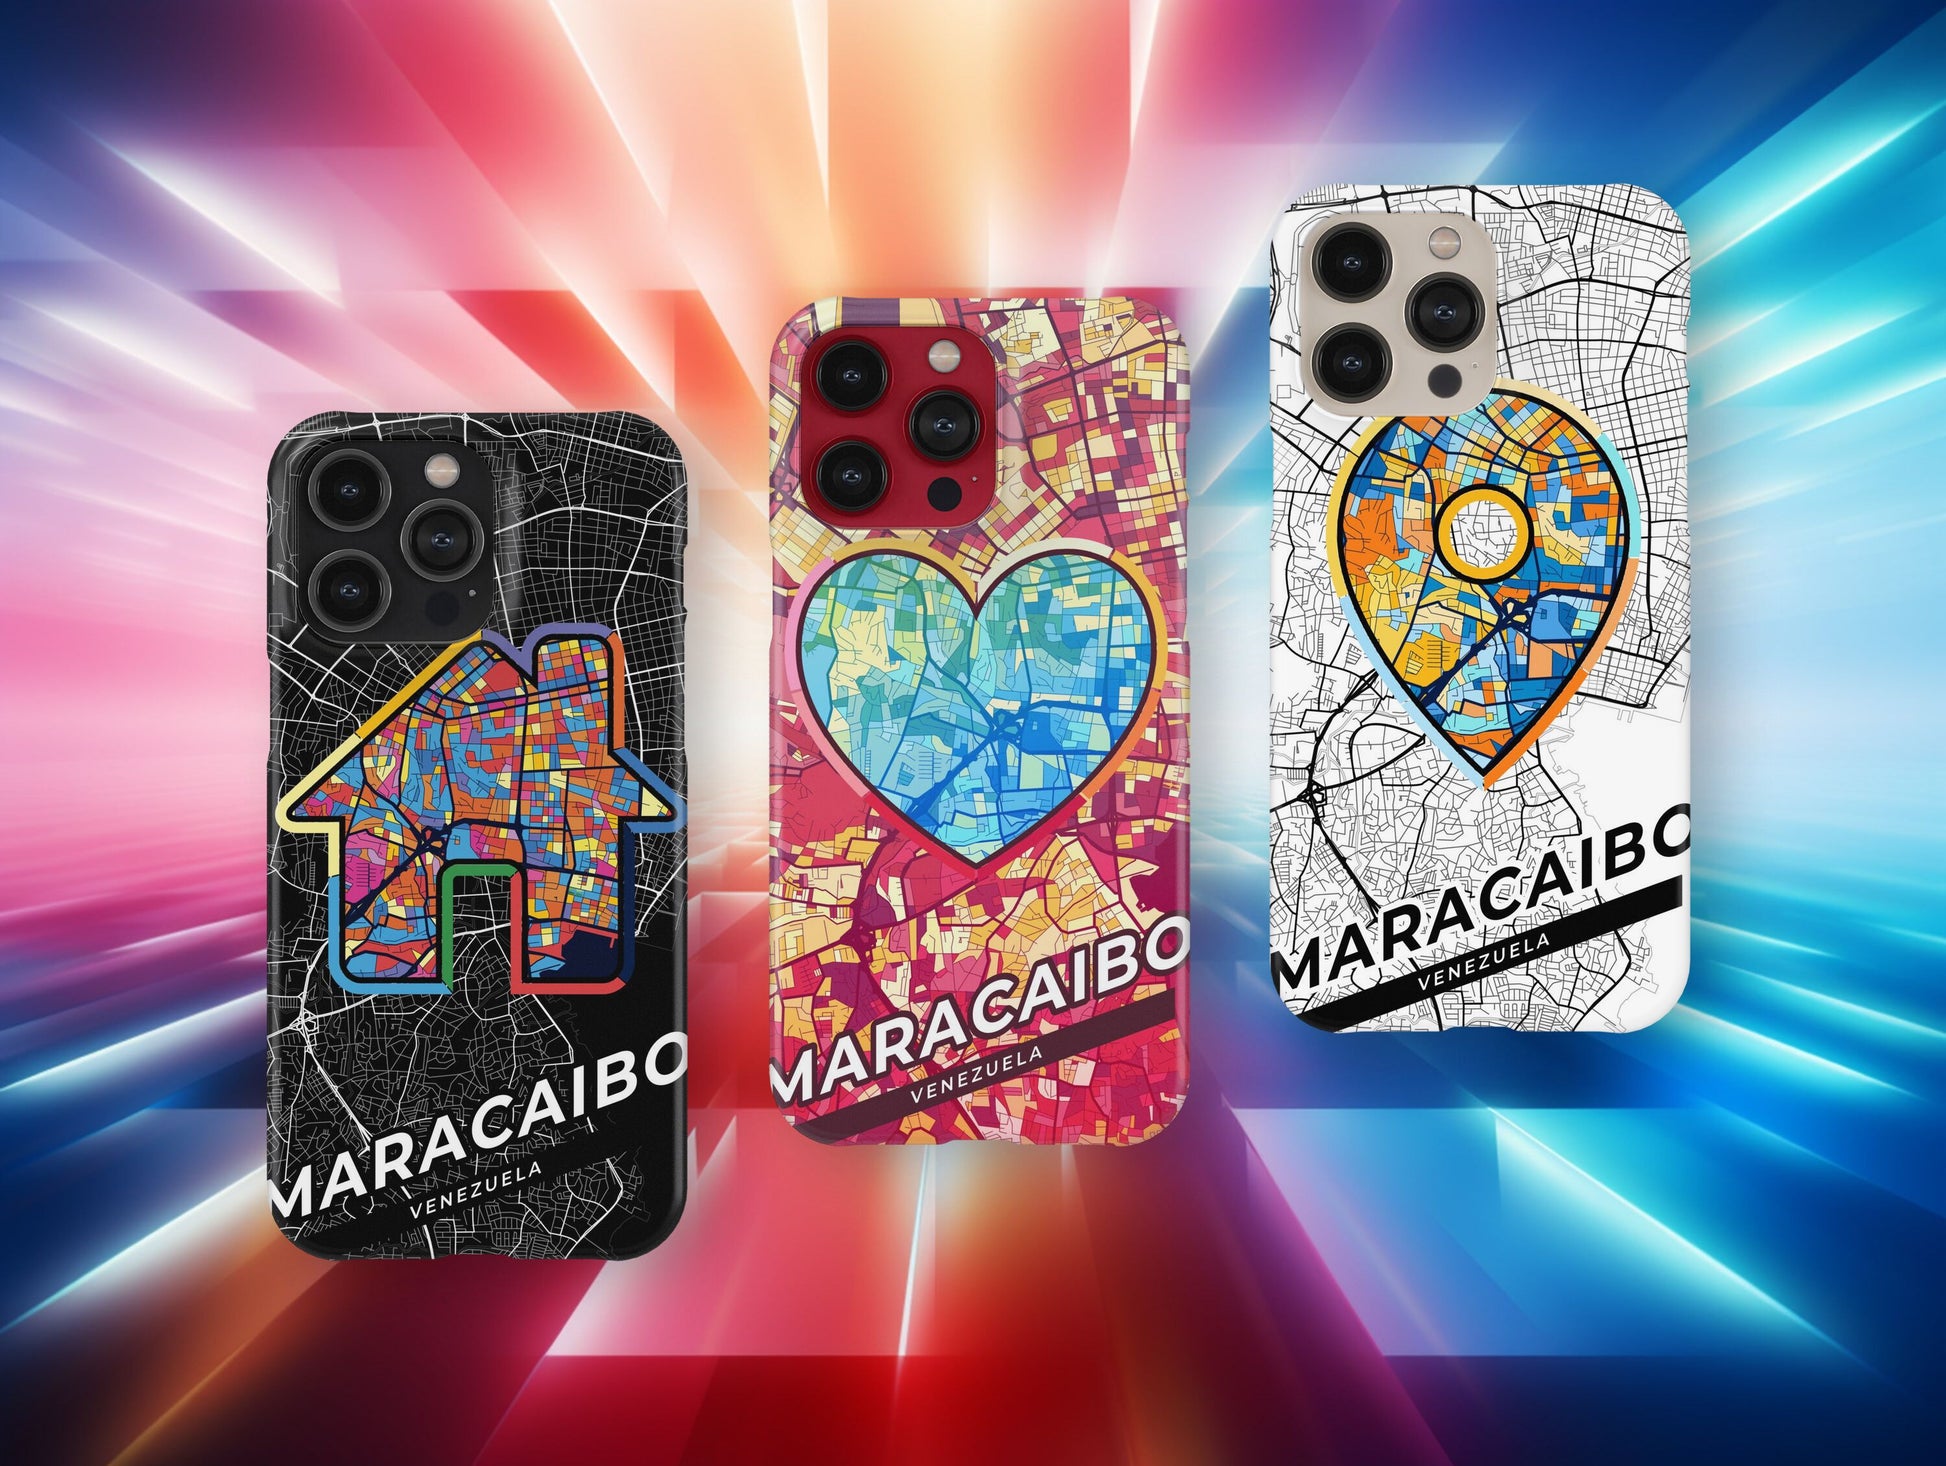 Maracaibo Venezuela slim phone case with colorful icon. Birthday, wedding or housewarming gift. Couple match cases.